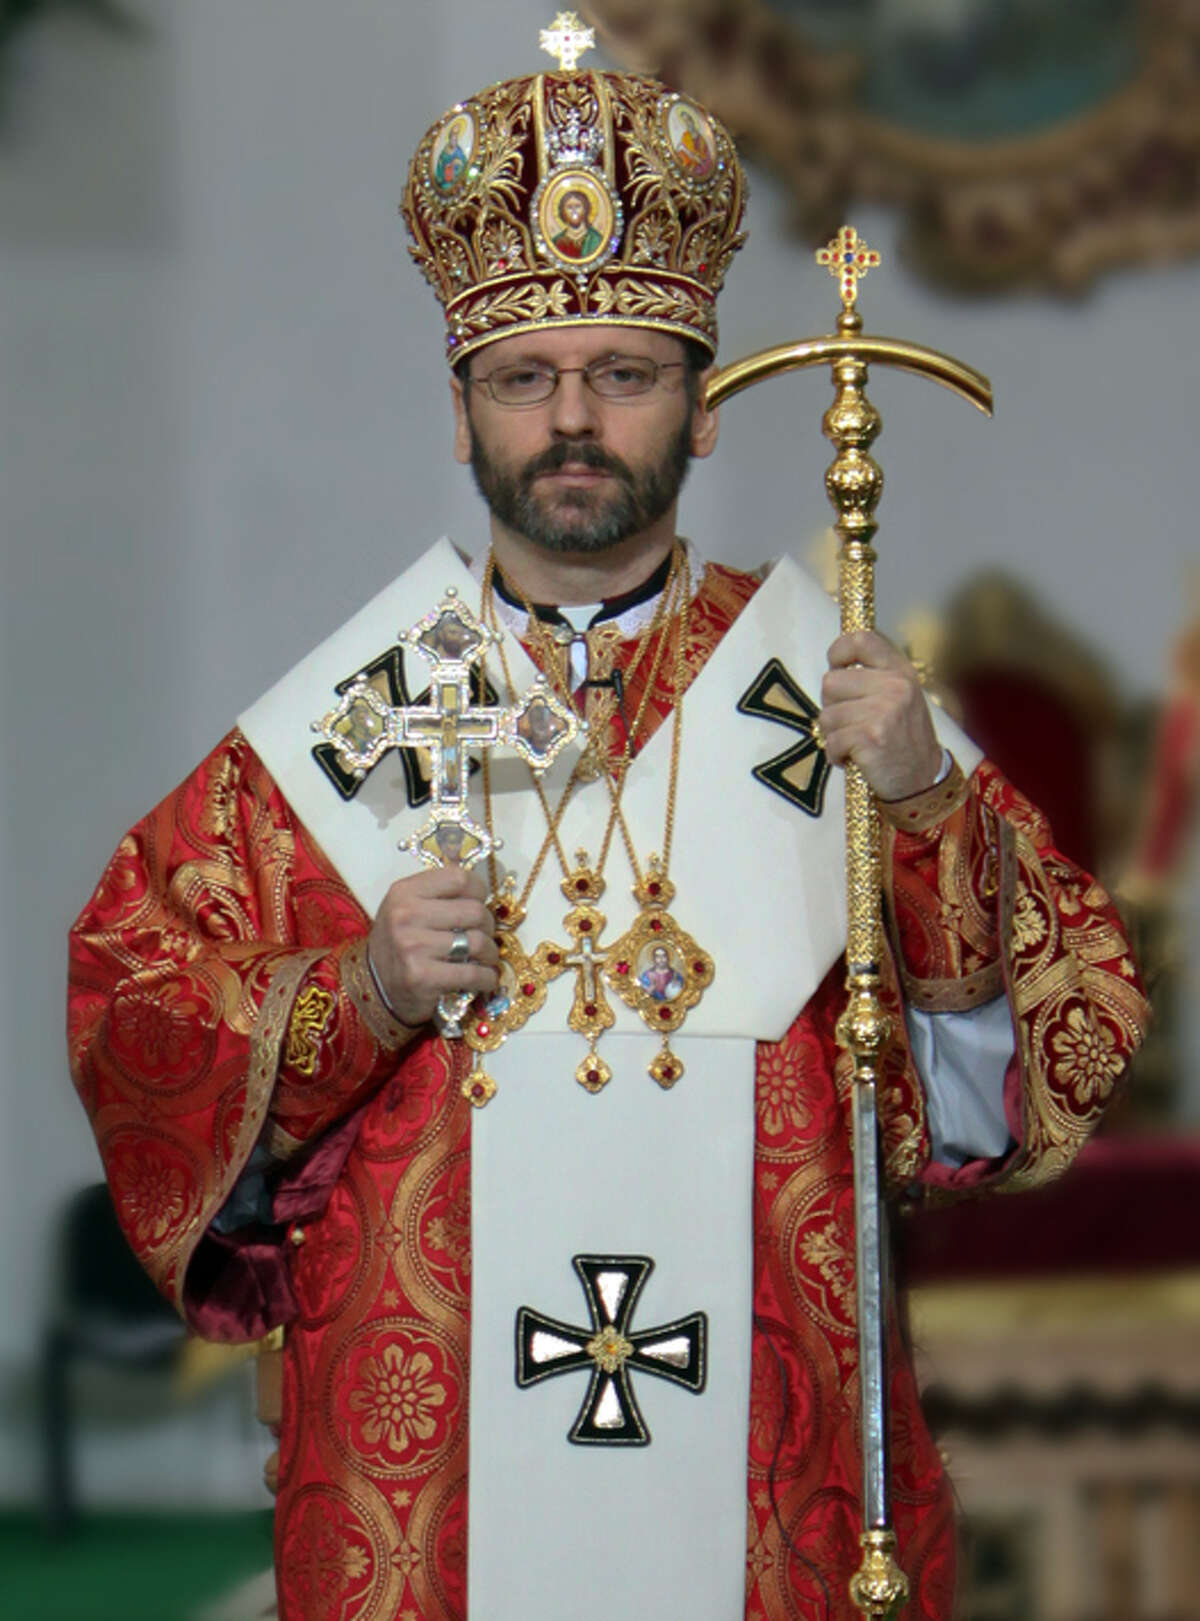 Major Archbishop Sviatoslav Shevchuk, the leader of the world’s six million Ukrainian Greek Catholics, will visit Stamford this week.